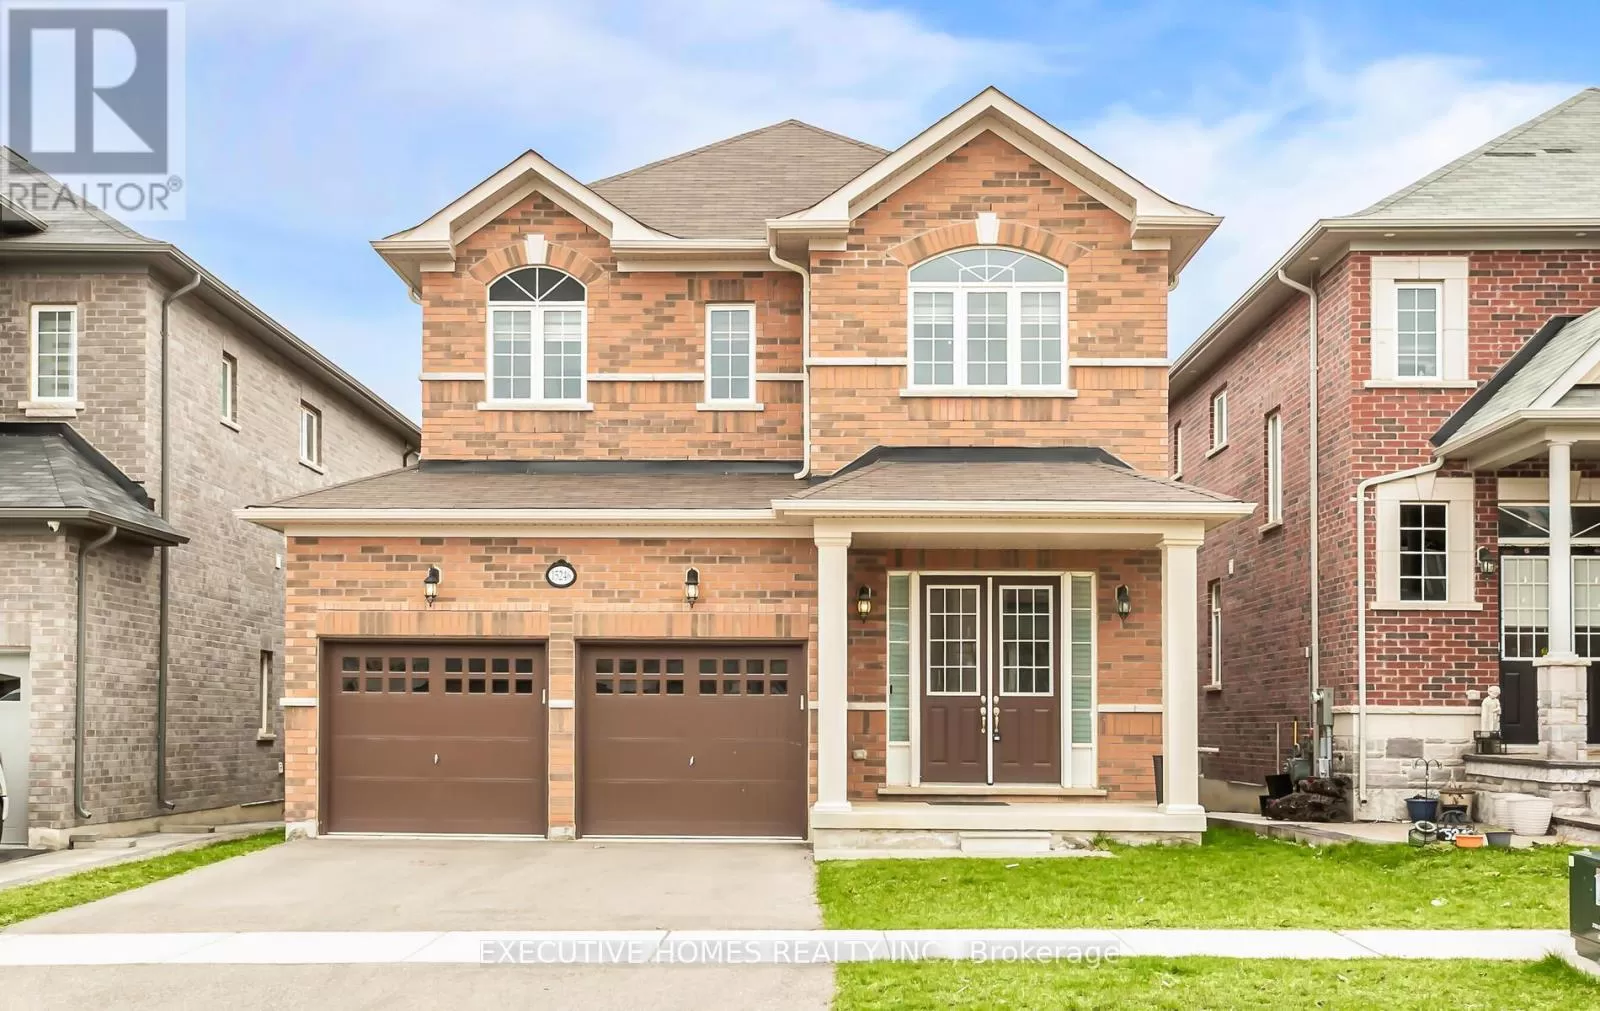 House for rent: 15246 Danby Rd, Halton Hills, Ontario L7G 0M5